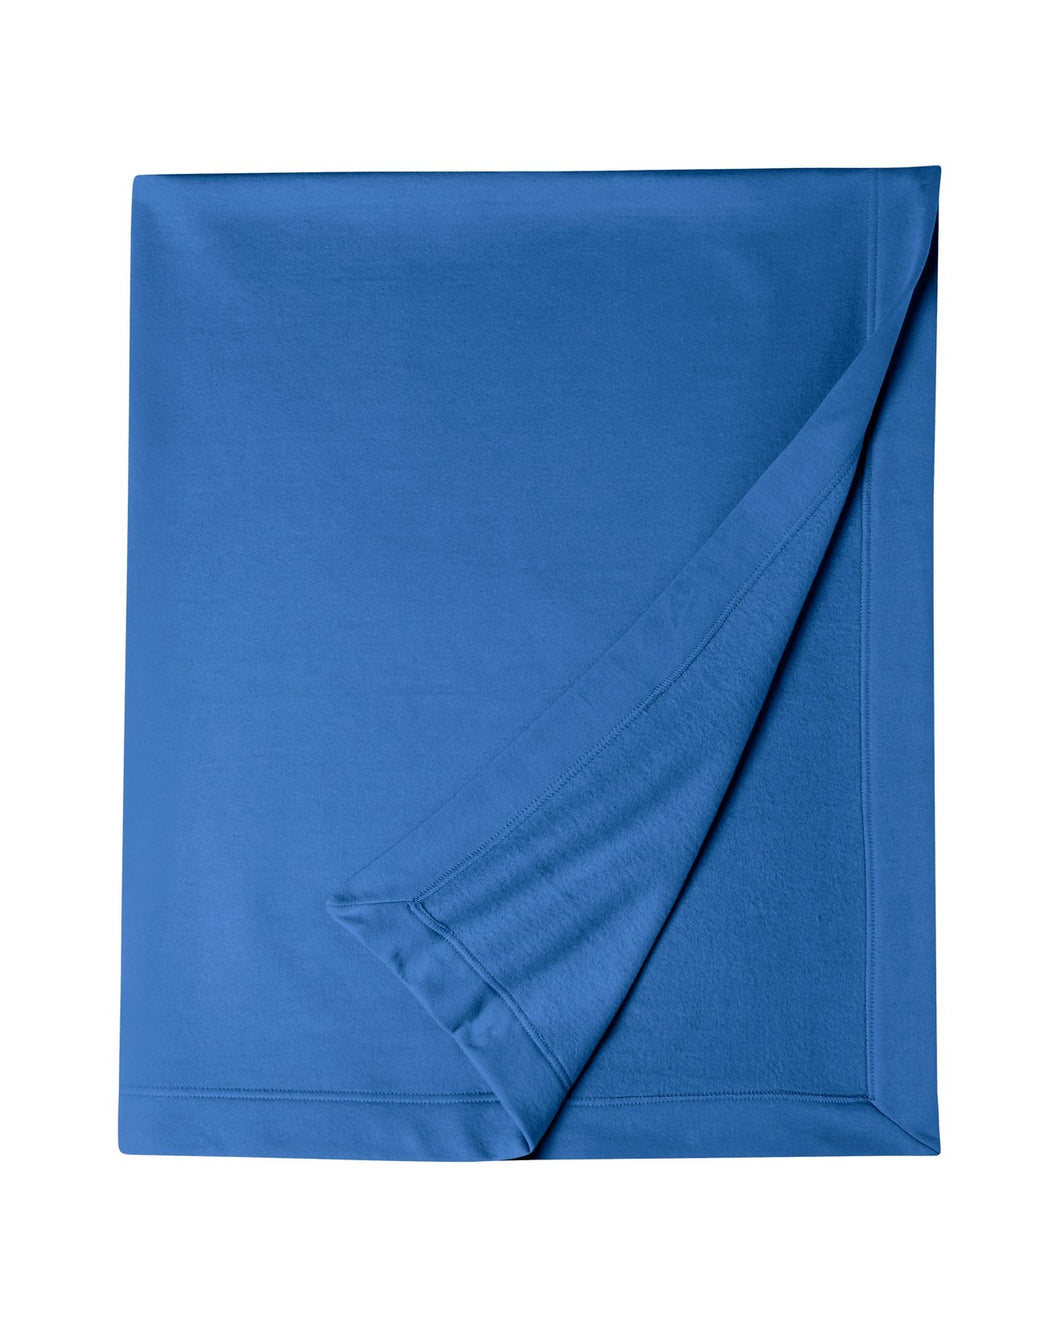 Royal Blue Sweatshirt Blanket w/Personalization